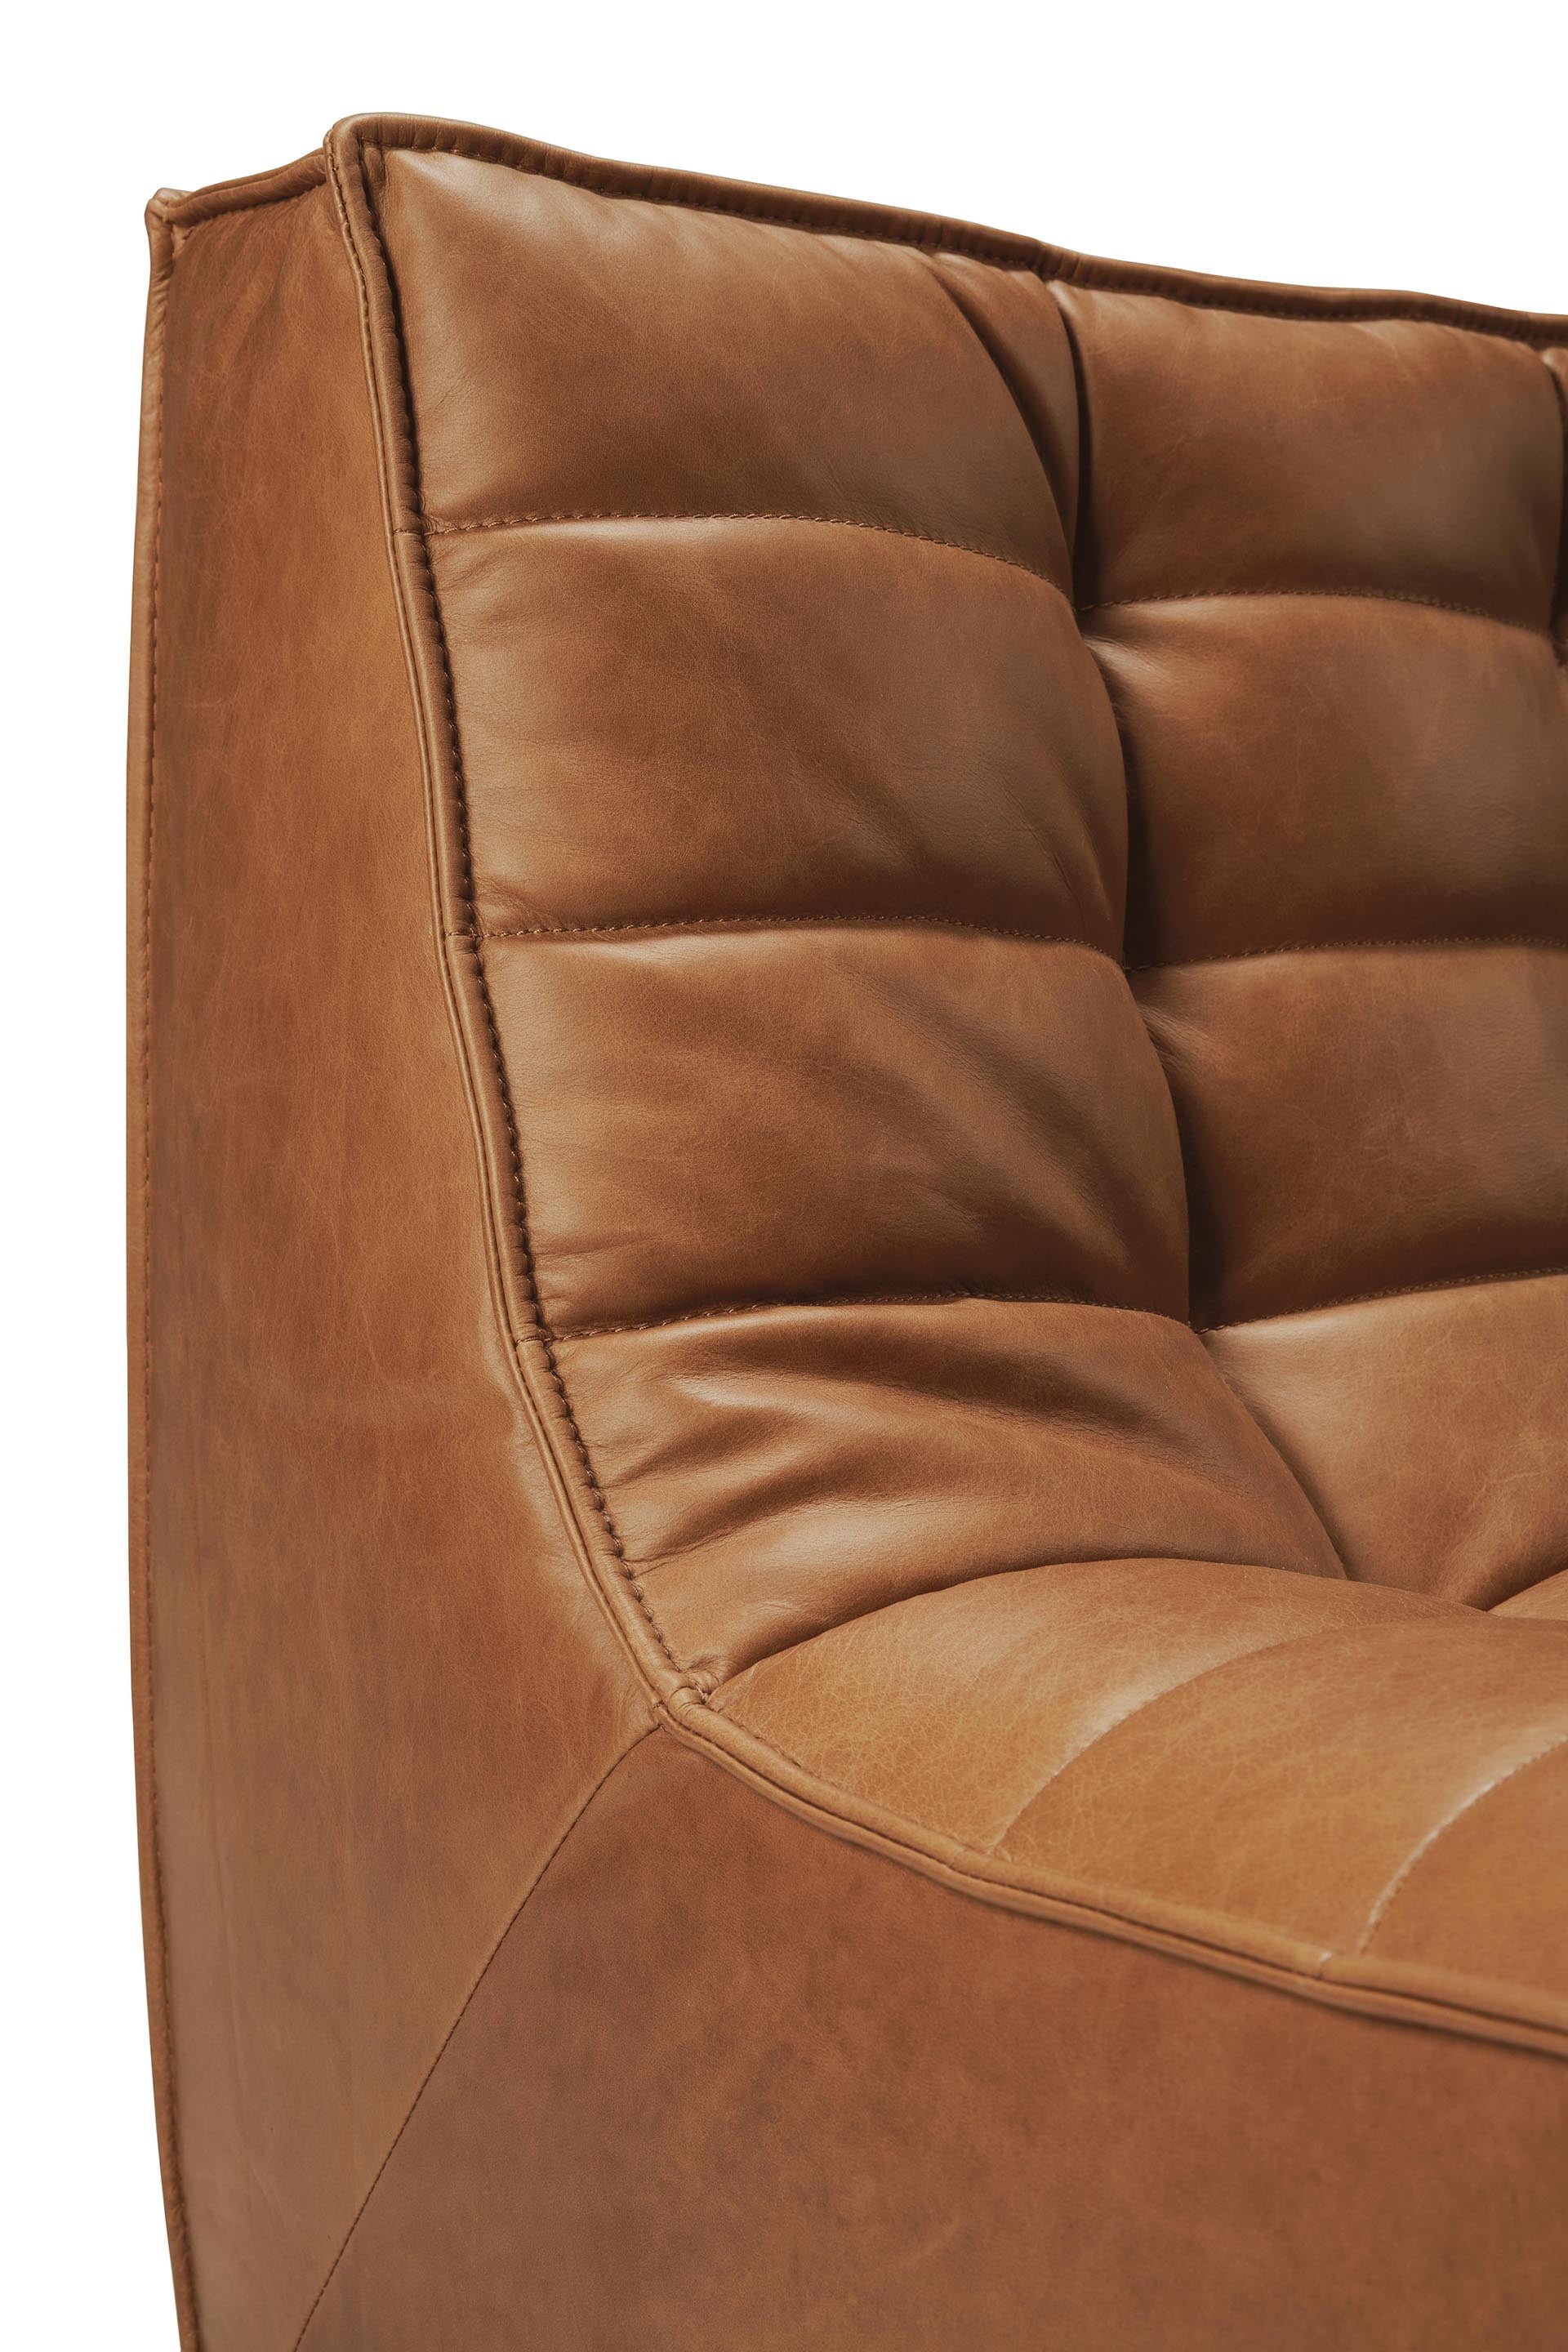 N701 3 Seater Sofa, Old Saddle Leather